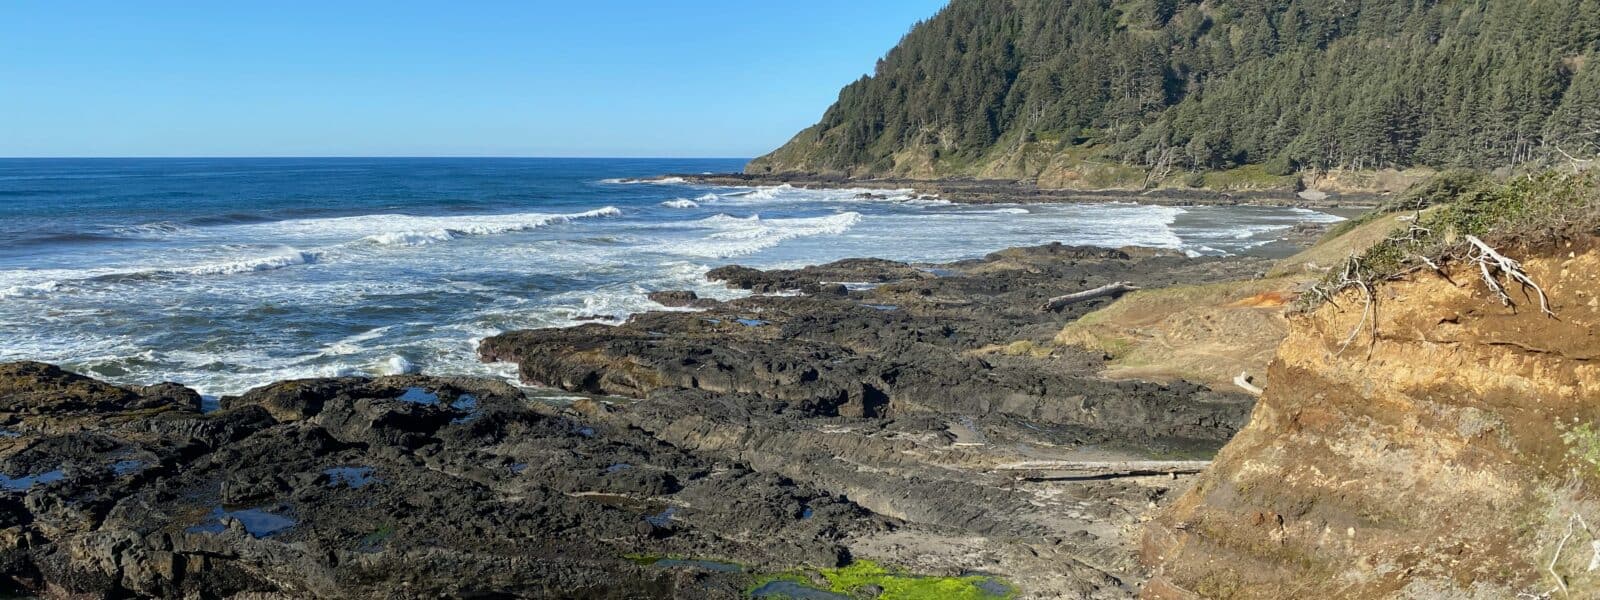 Where to Find Tidal Pools on the Oregon Coast